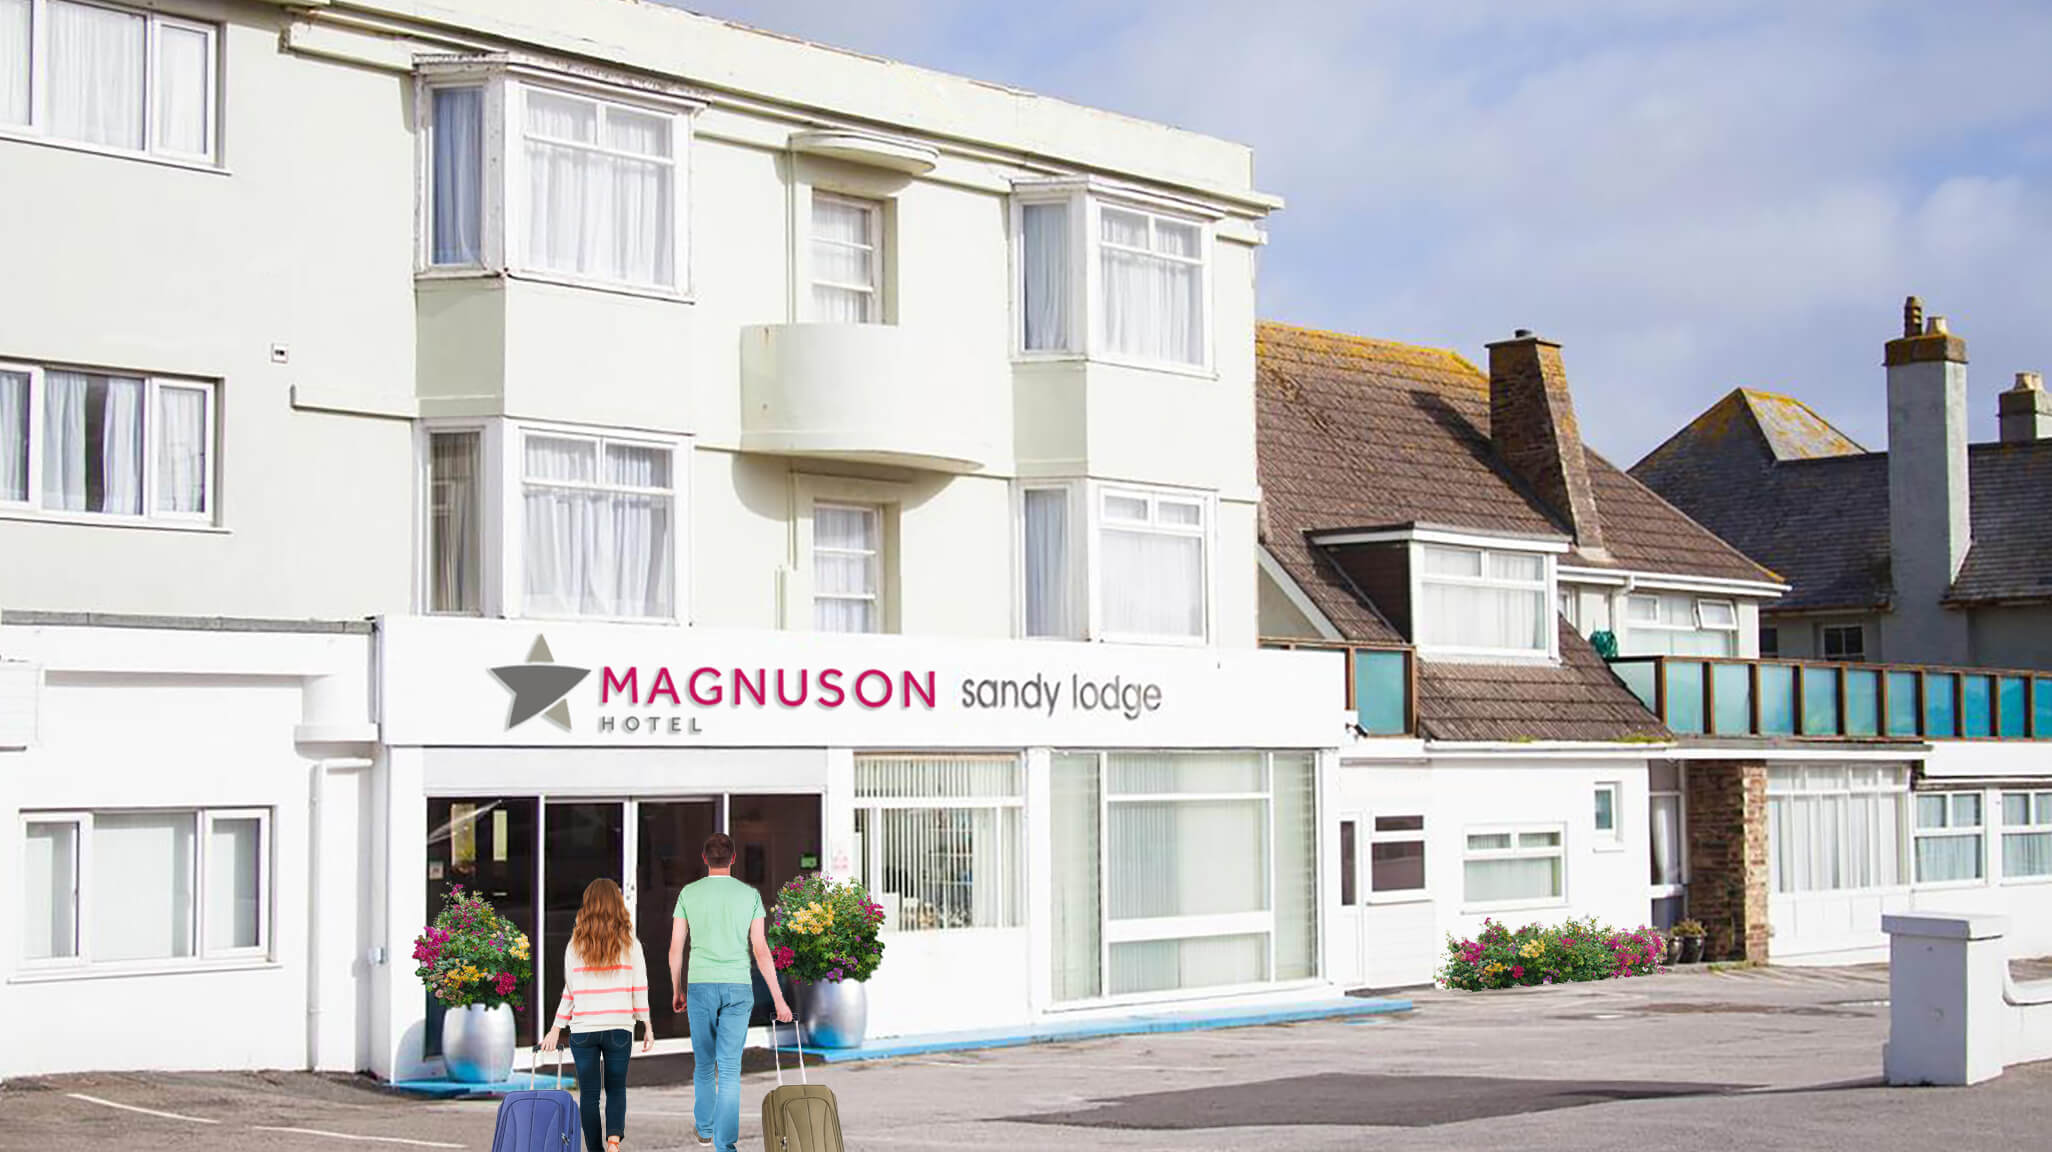 Magnuson Hotel Sandy Lodge, Newquay UK